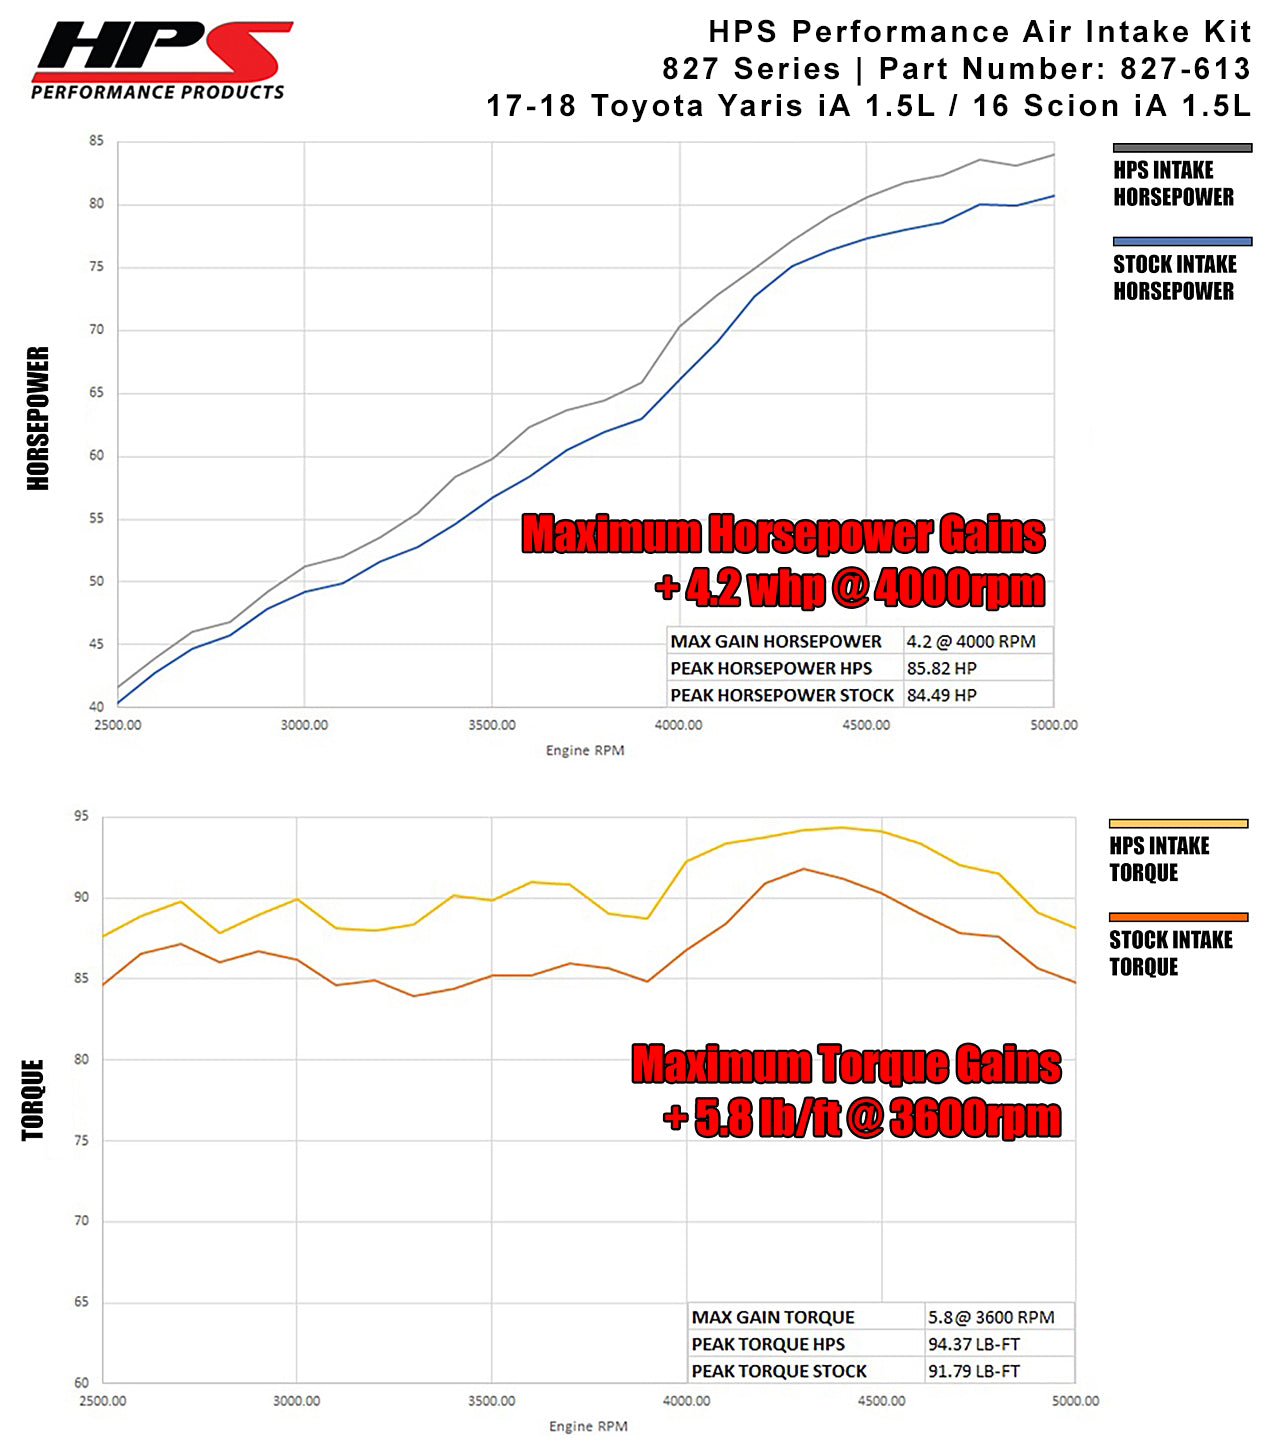 Dyno proven increase horsepower 4.2 whp torque 5.8 ft/lb HPS Shortram Cold Air Intake Kit 2016 Scion iA 1.5L 827-613